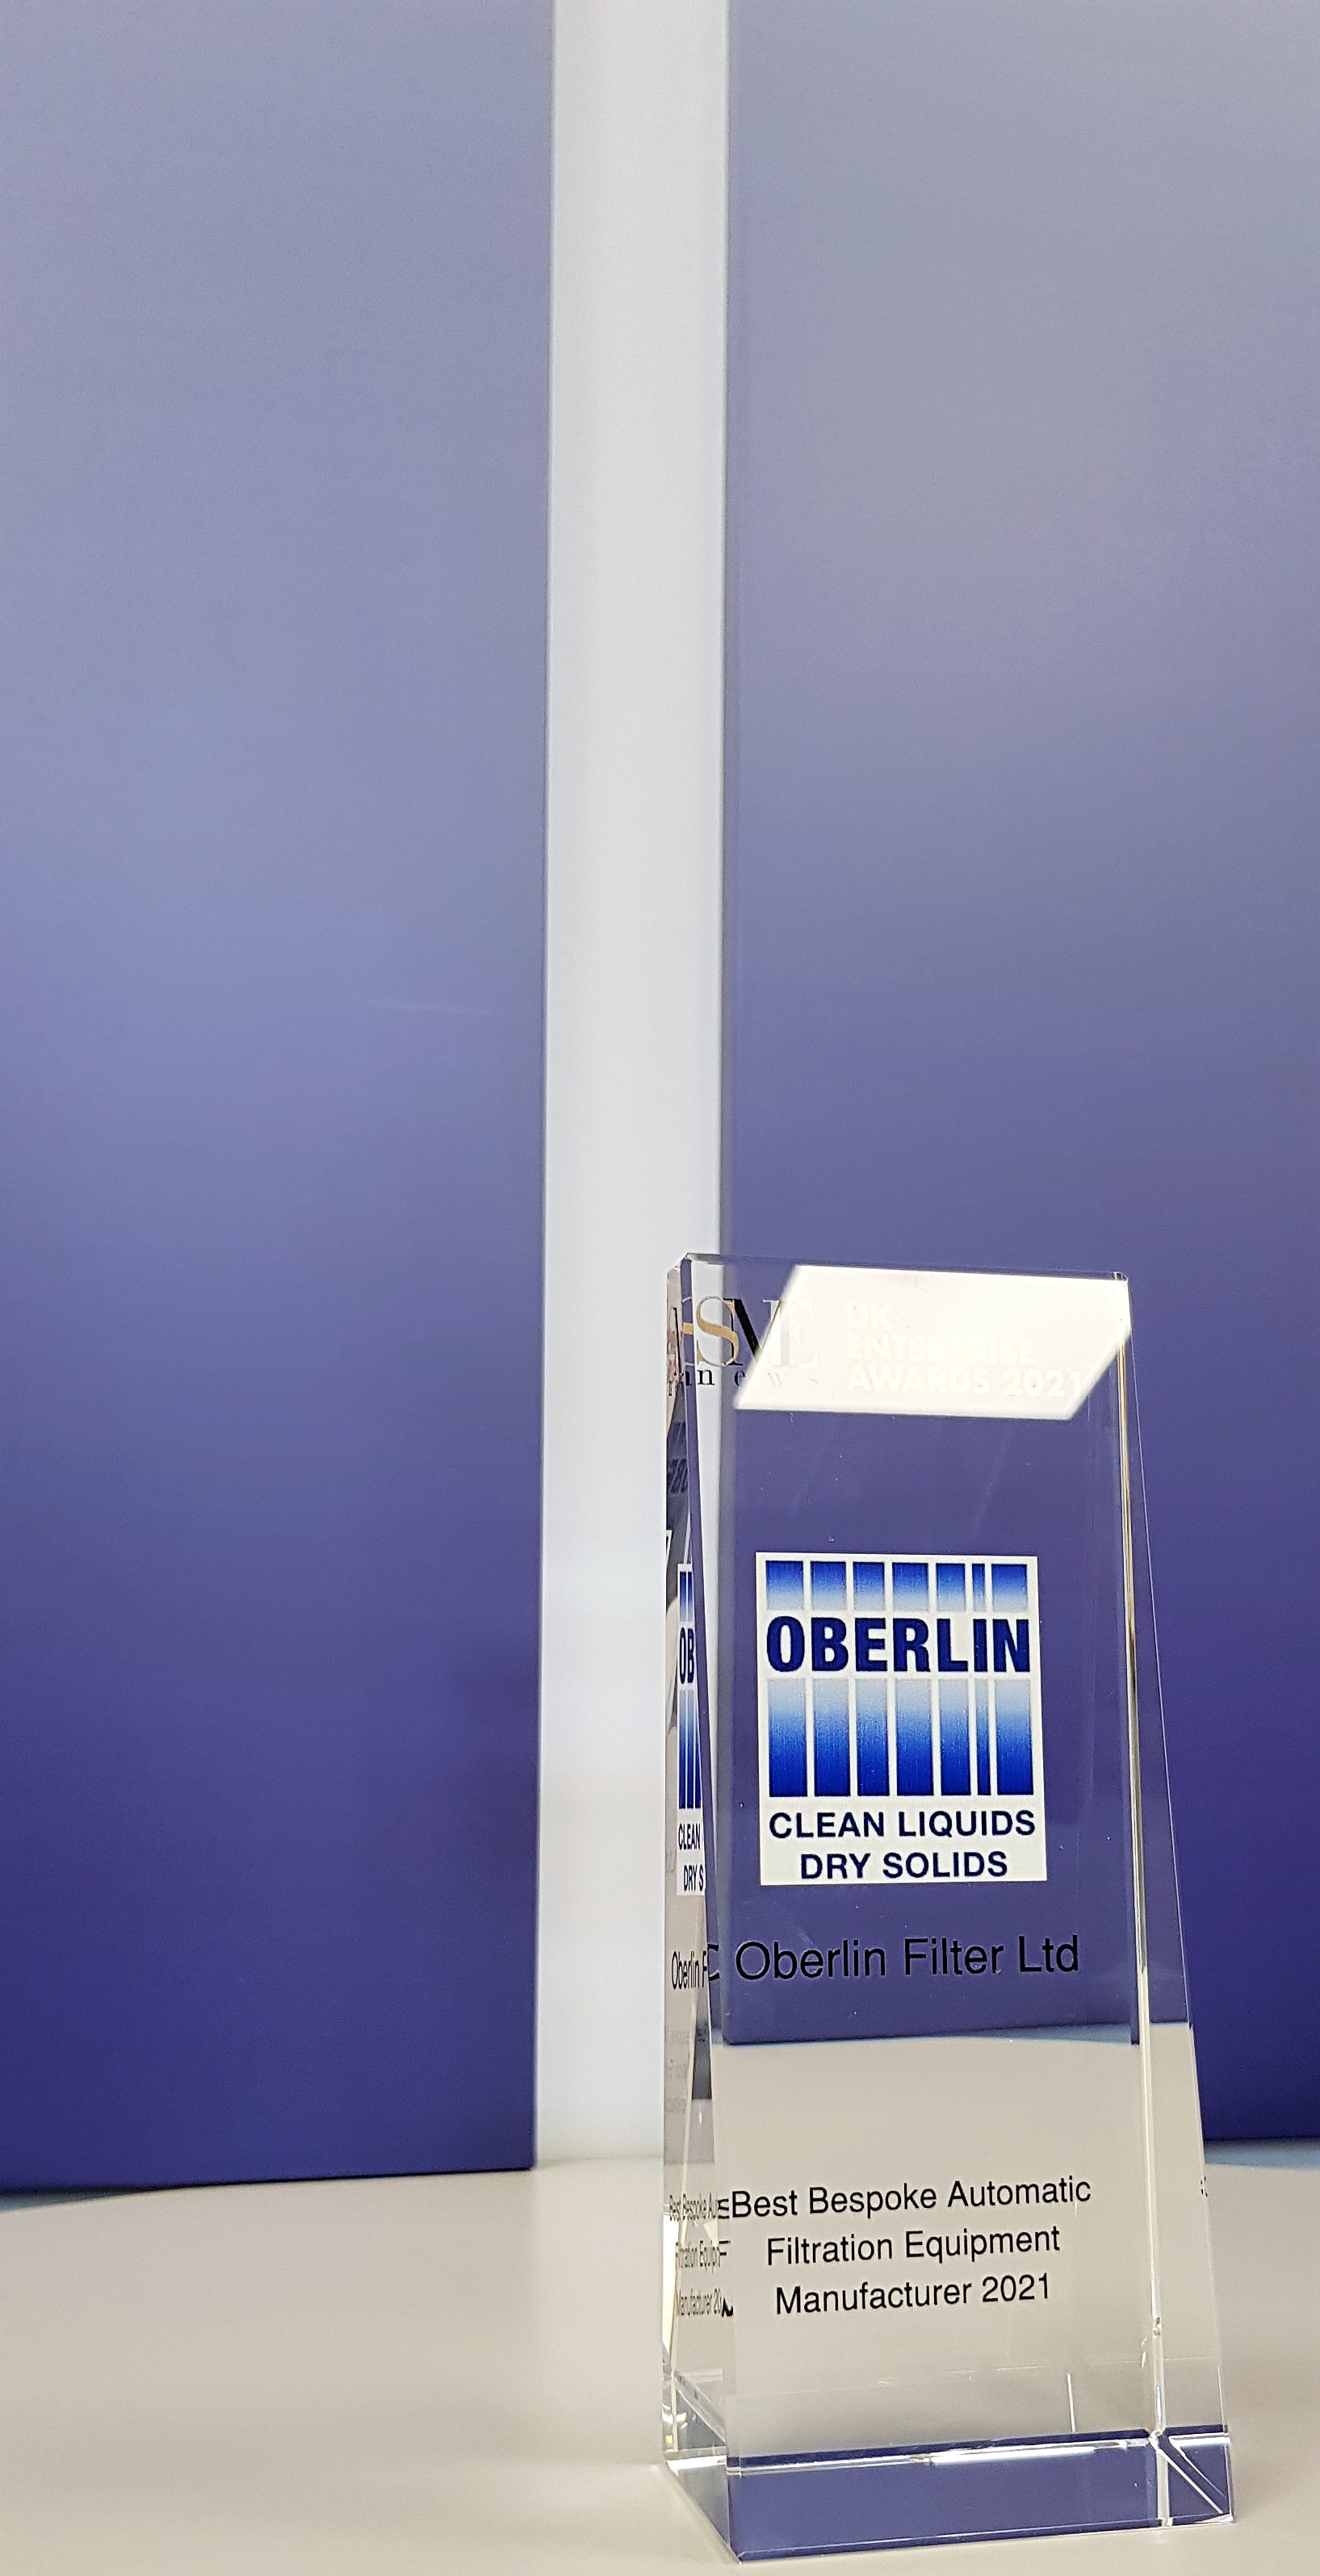 Main image for Oberlin Filter Ltd